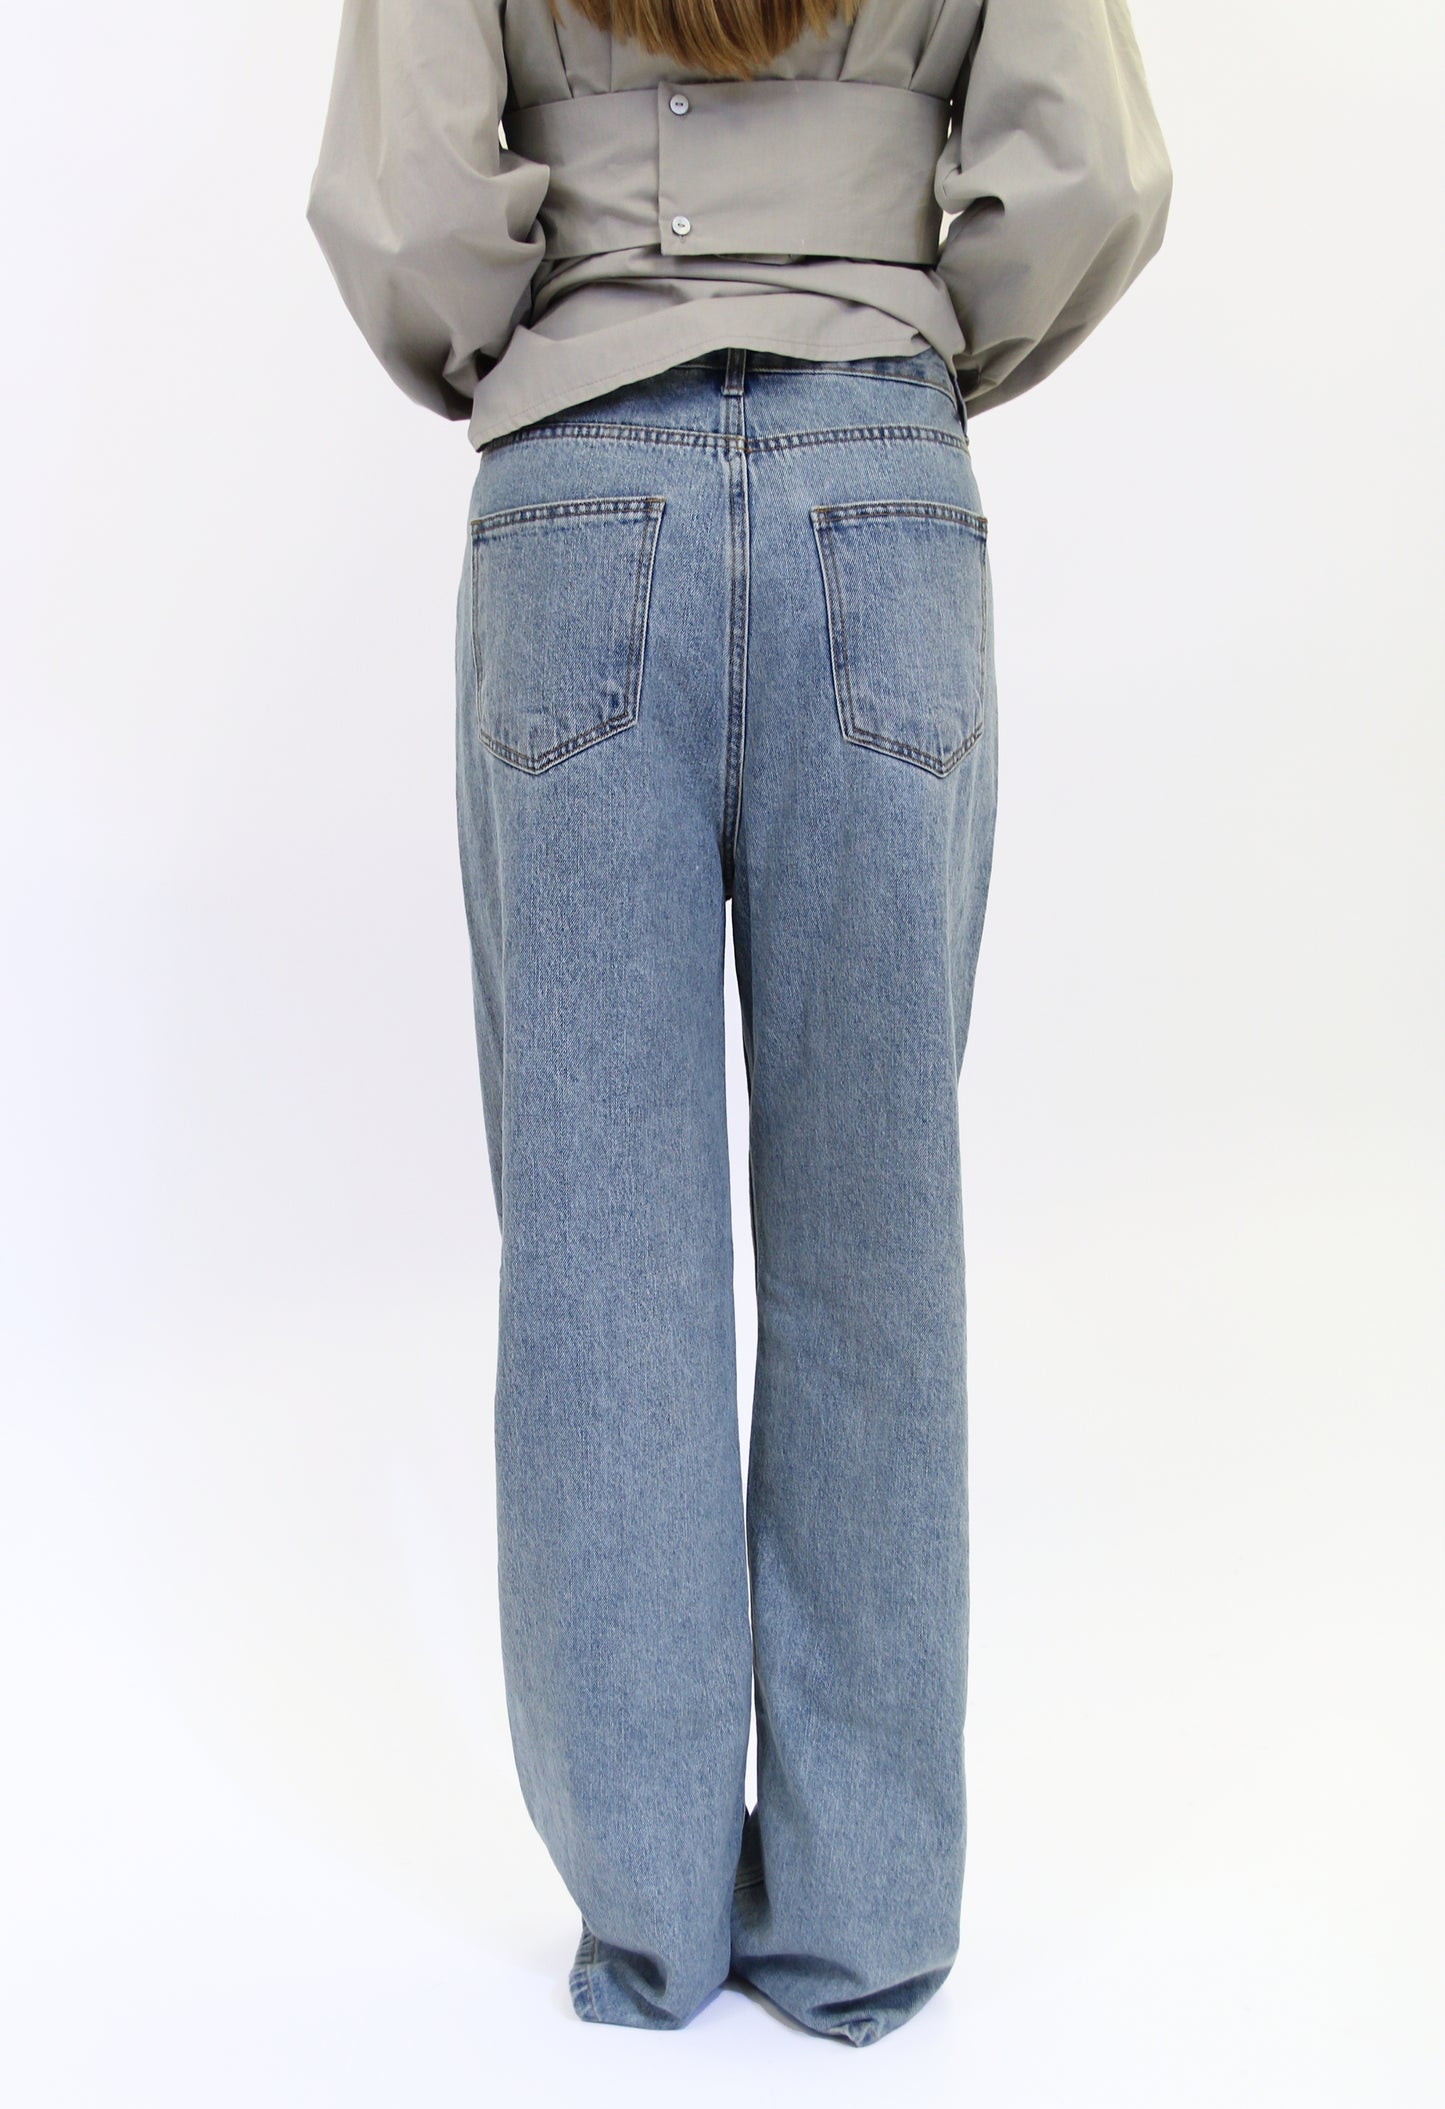 Asymmetrical Button Up Jeans